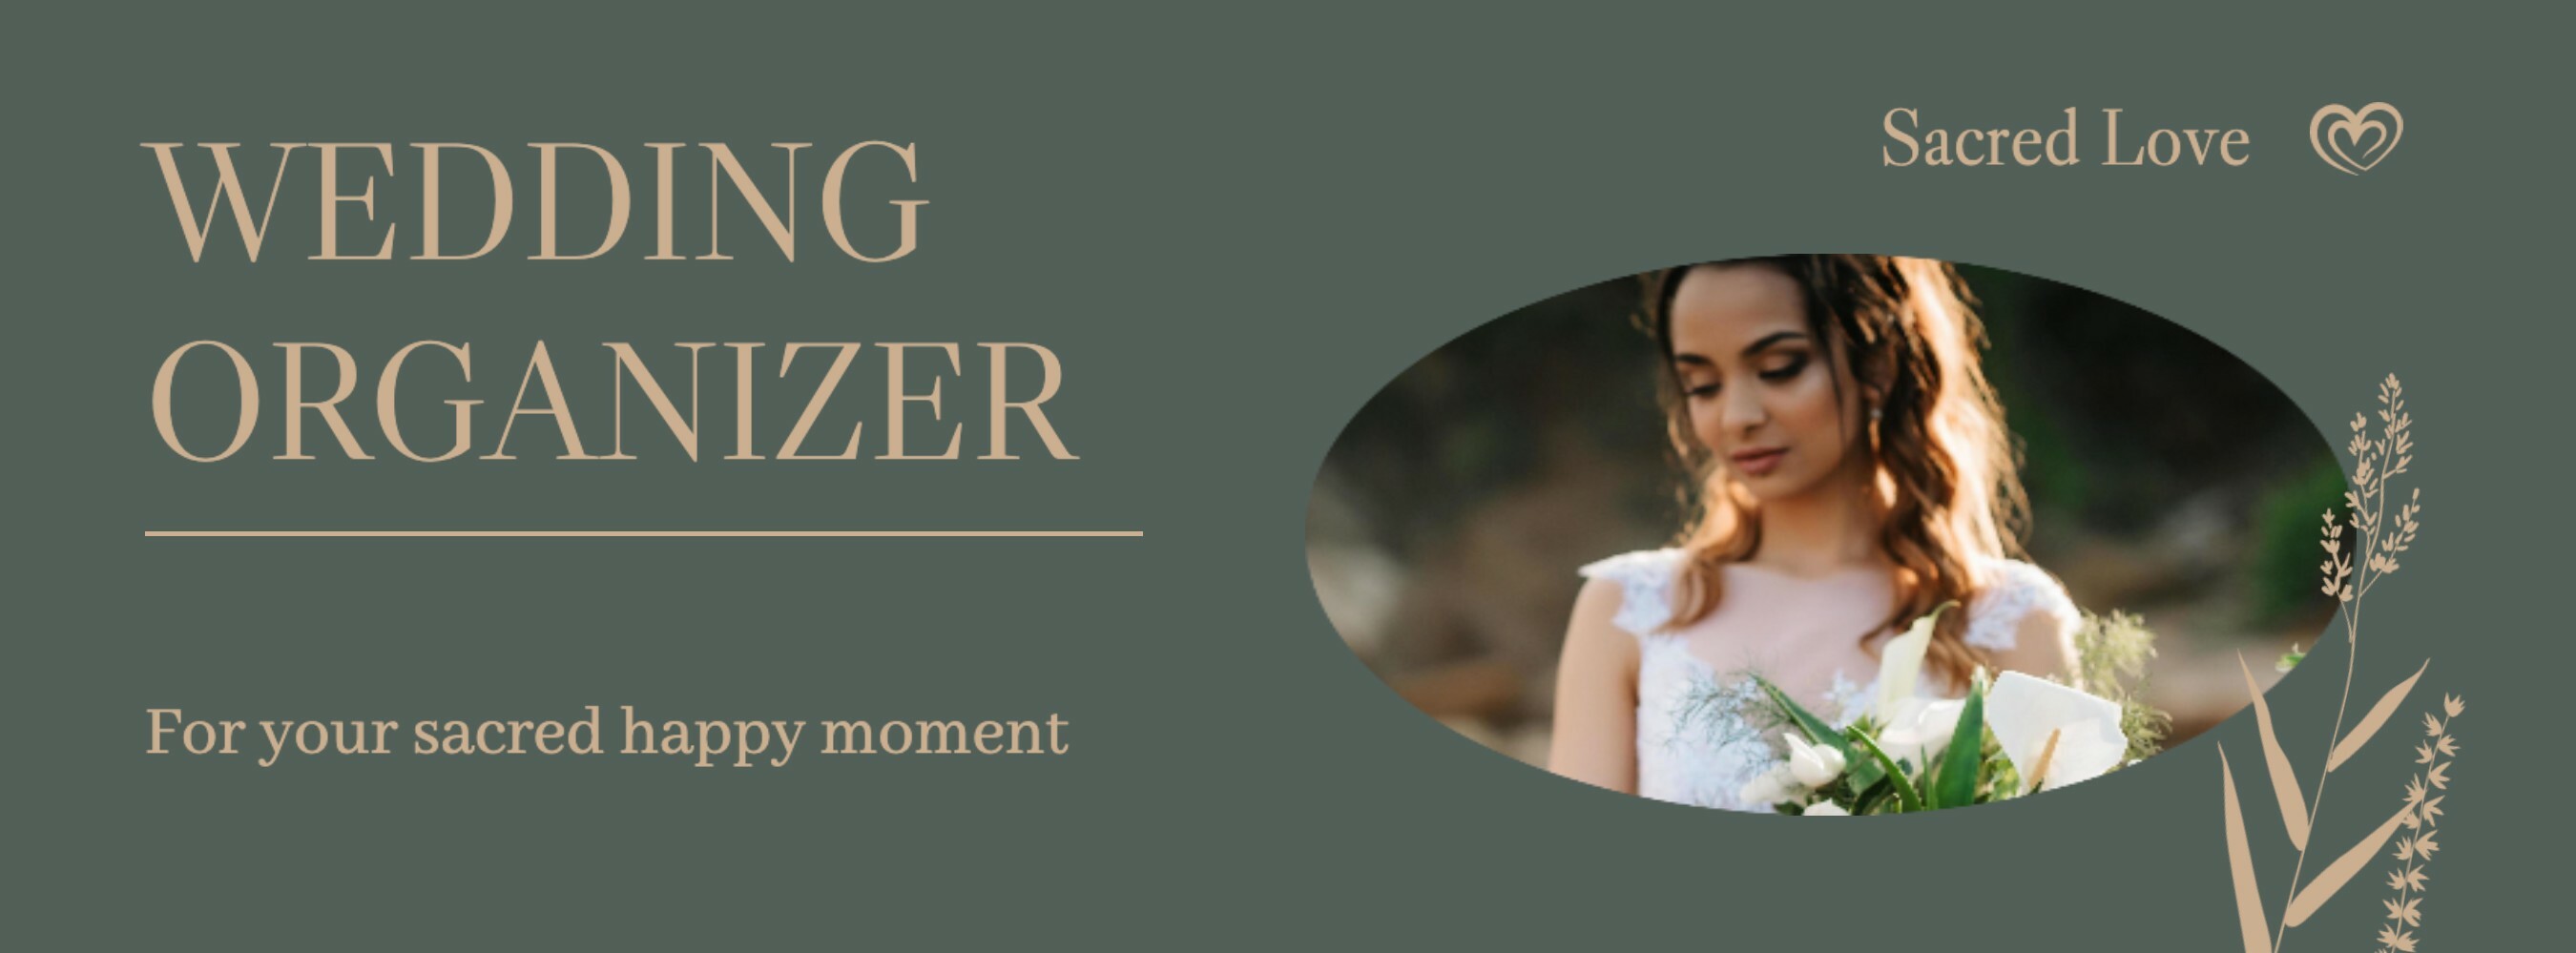 Green Elegant Wedding Organizer Facebook Cover template